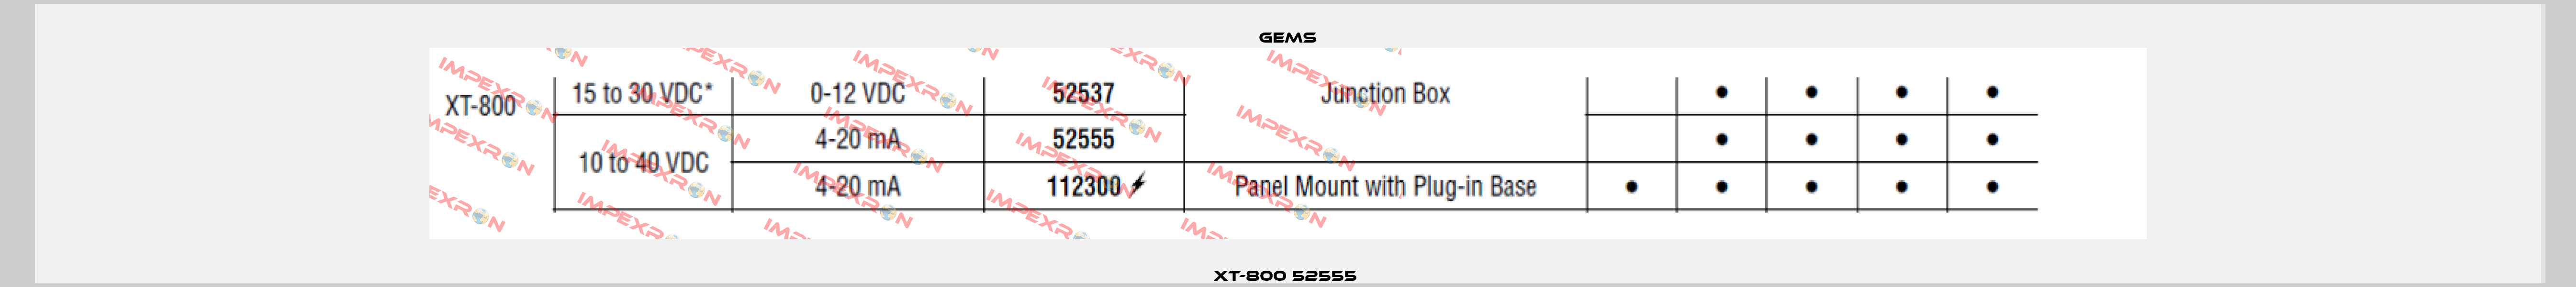 XT-800 52555  Gems